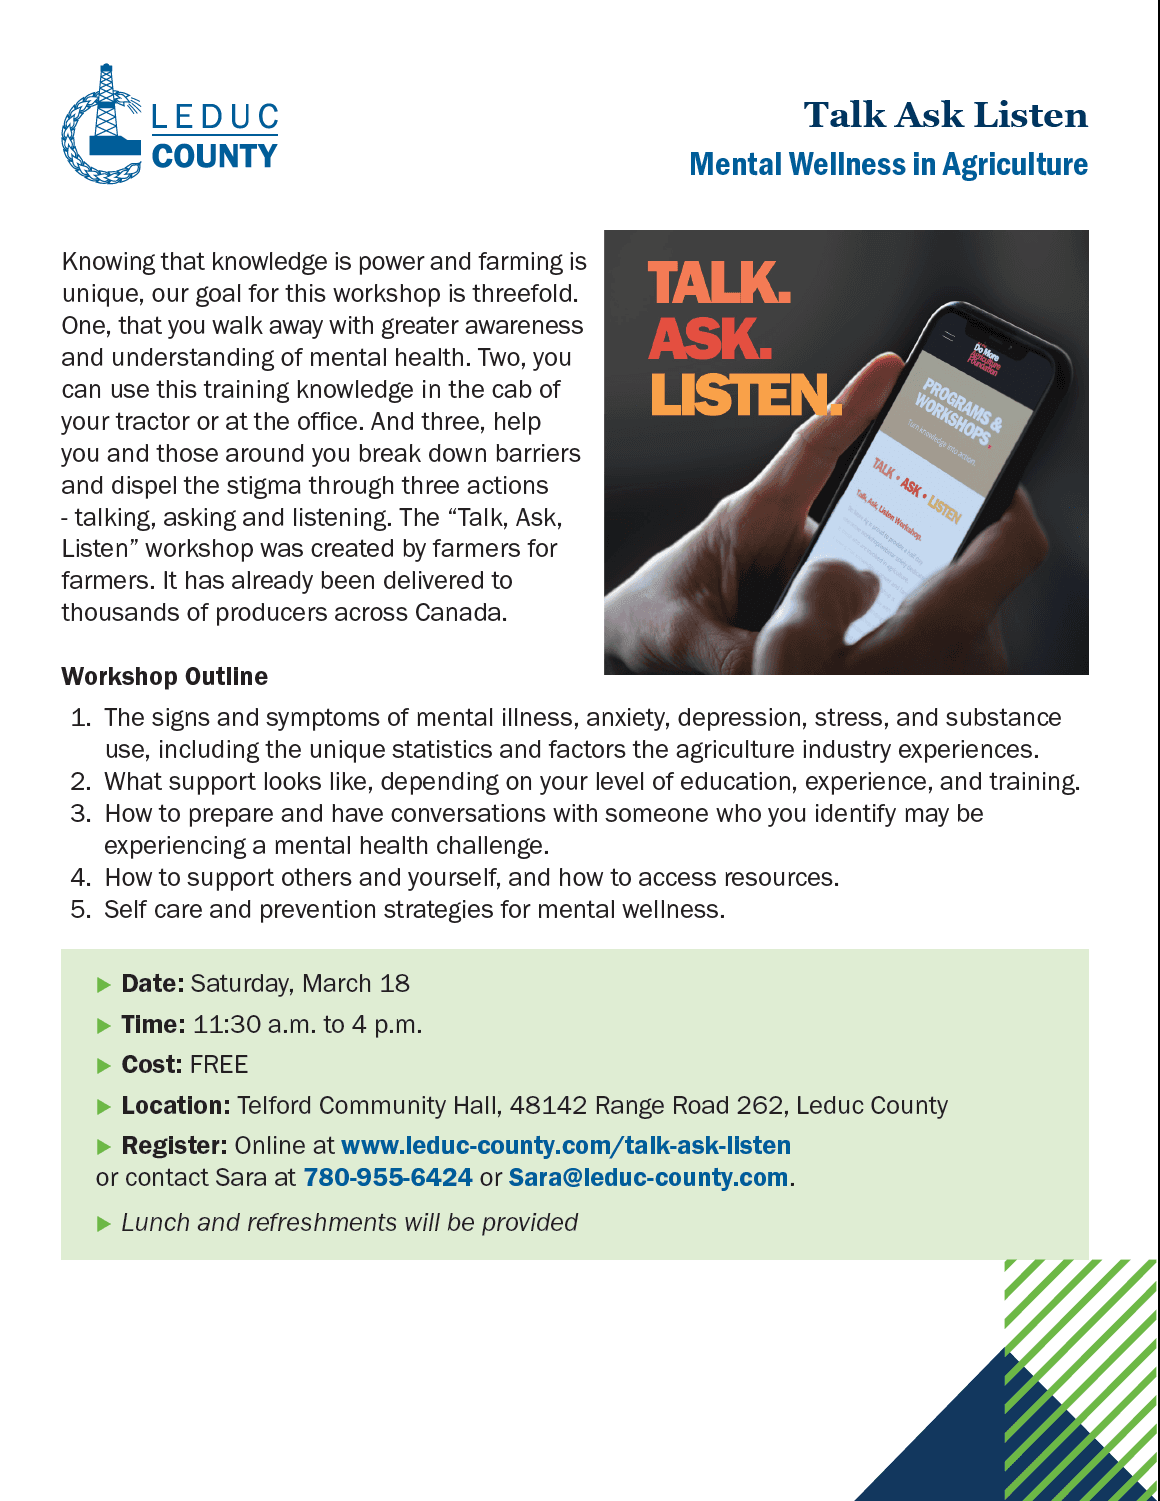 TALK, ASK, LISTEN - Mental Health Workshop